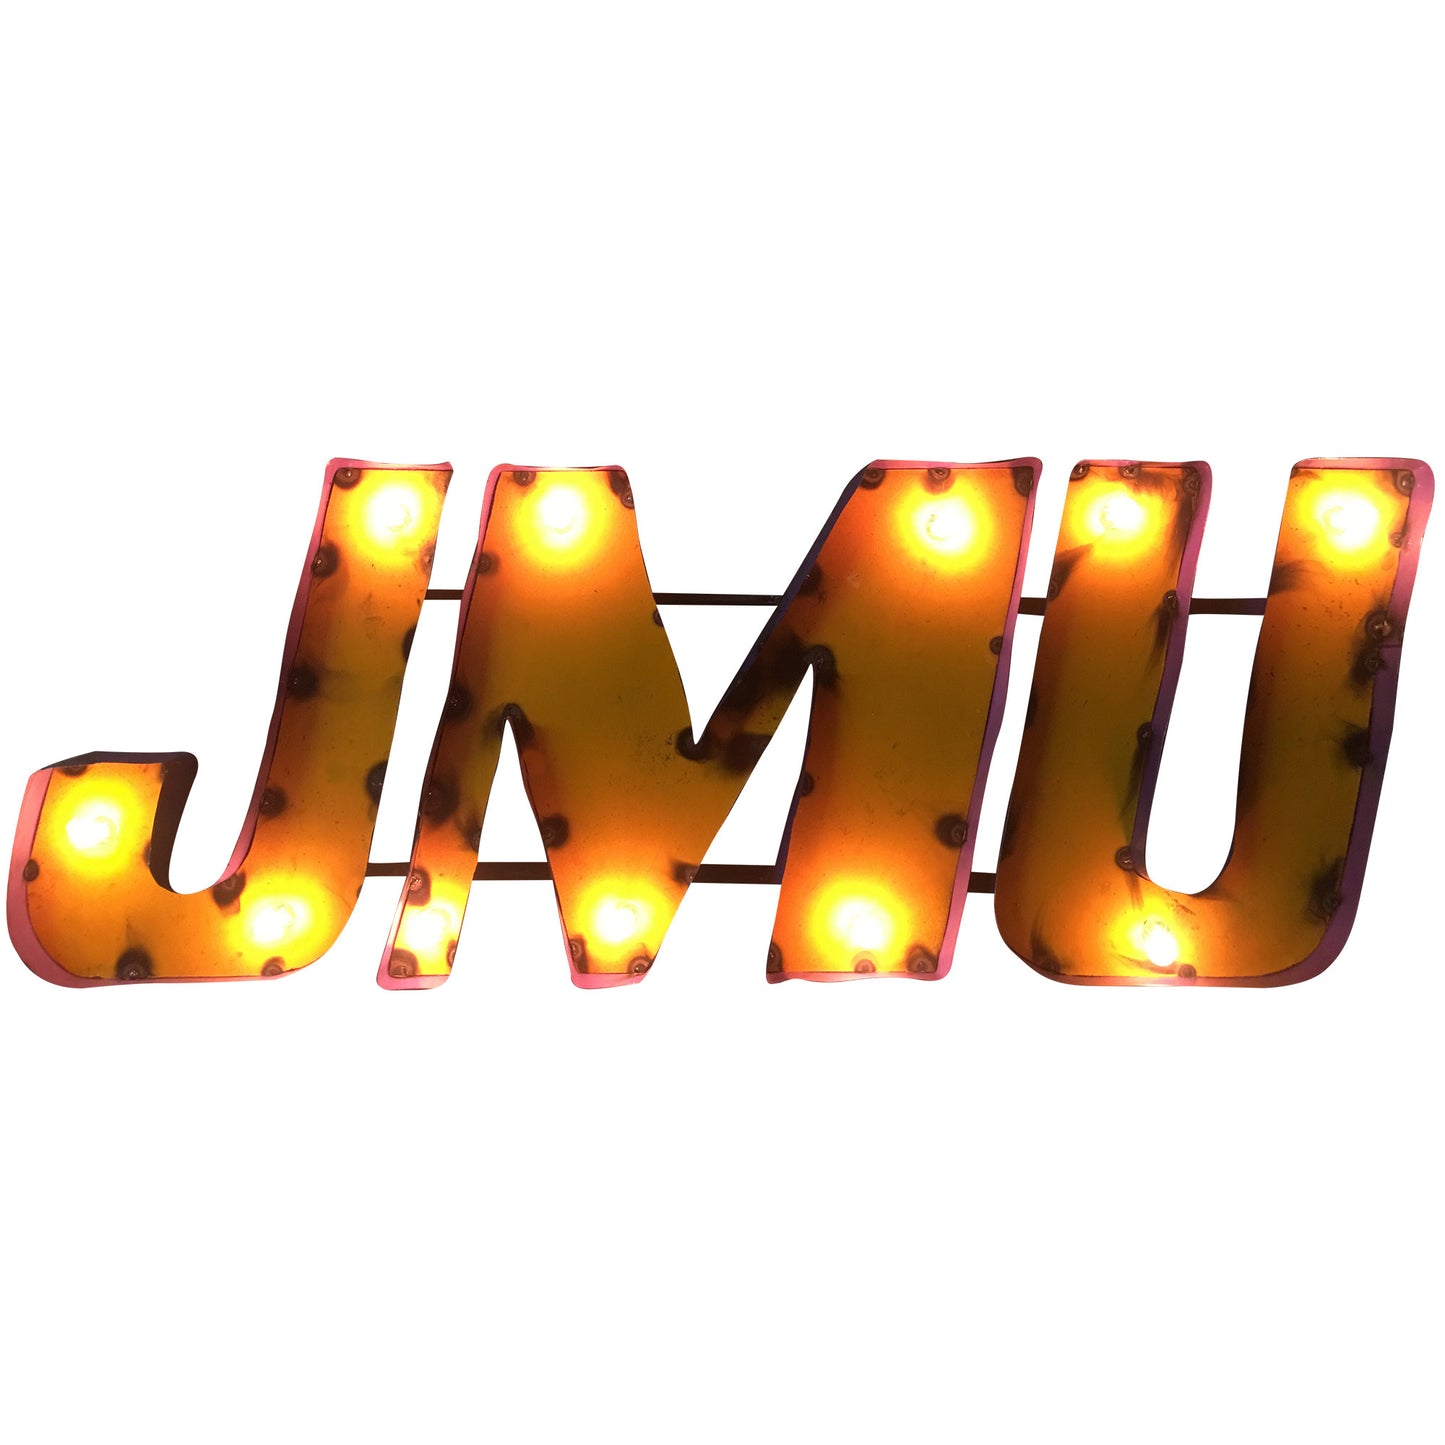 James Madison University "JMU" Lighted Recycled Metal Wall Decor